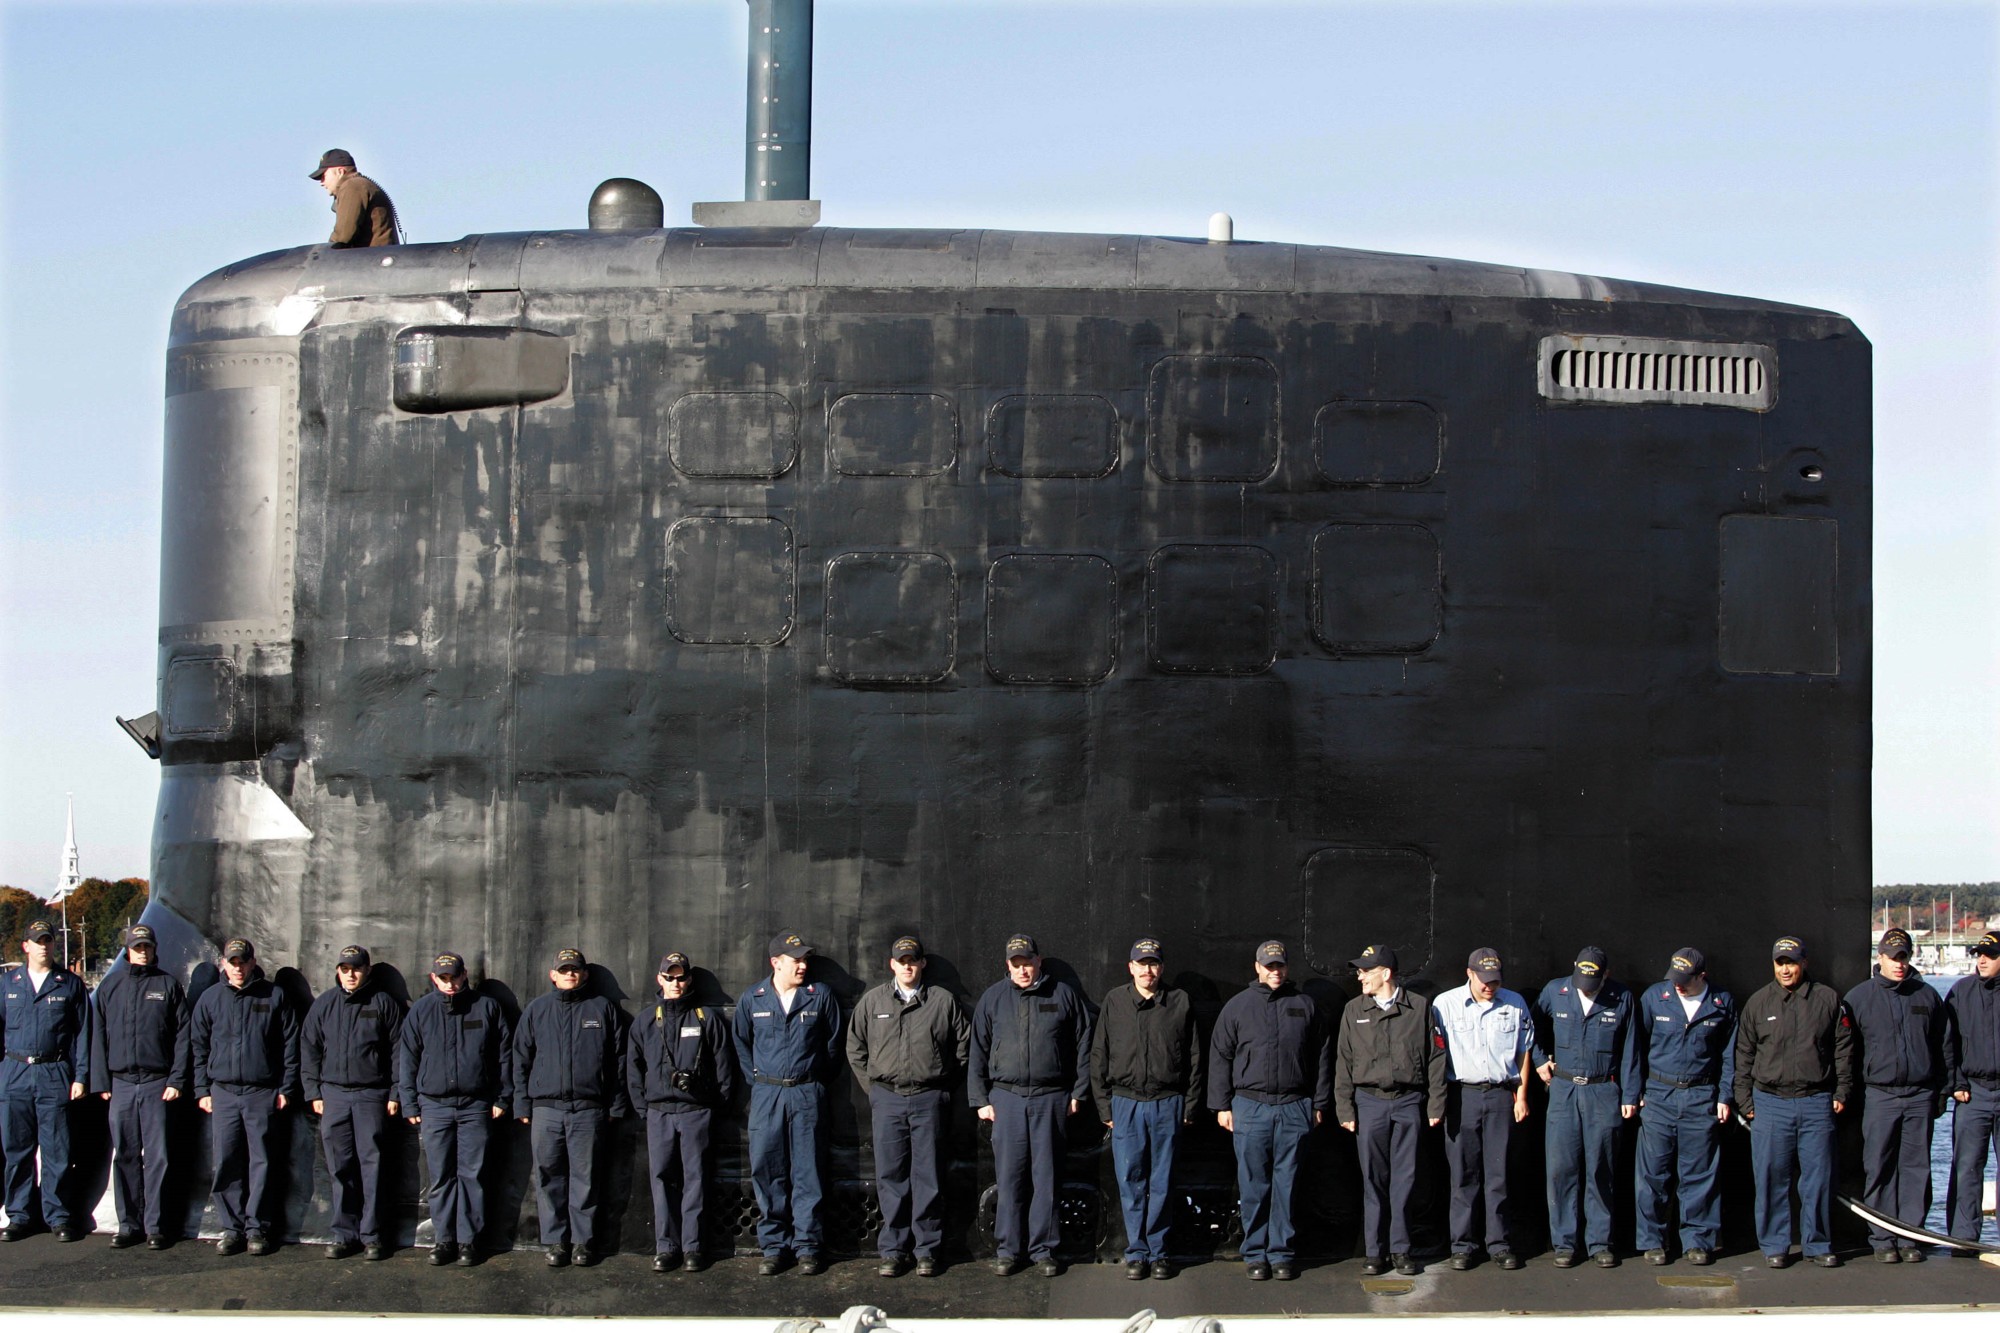 ssn-778 uss new hampshire virginia class attack submarine us navy 17 portsmouth naval shipyard kittery maine